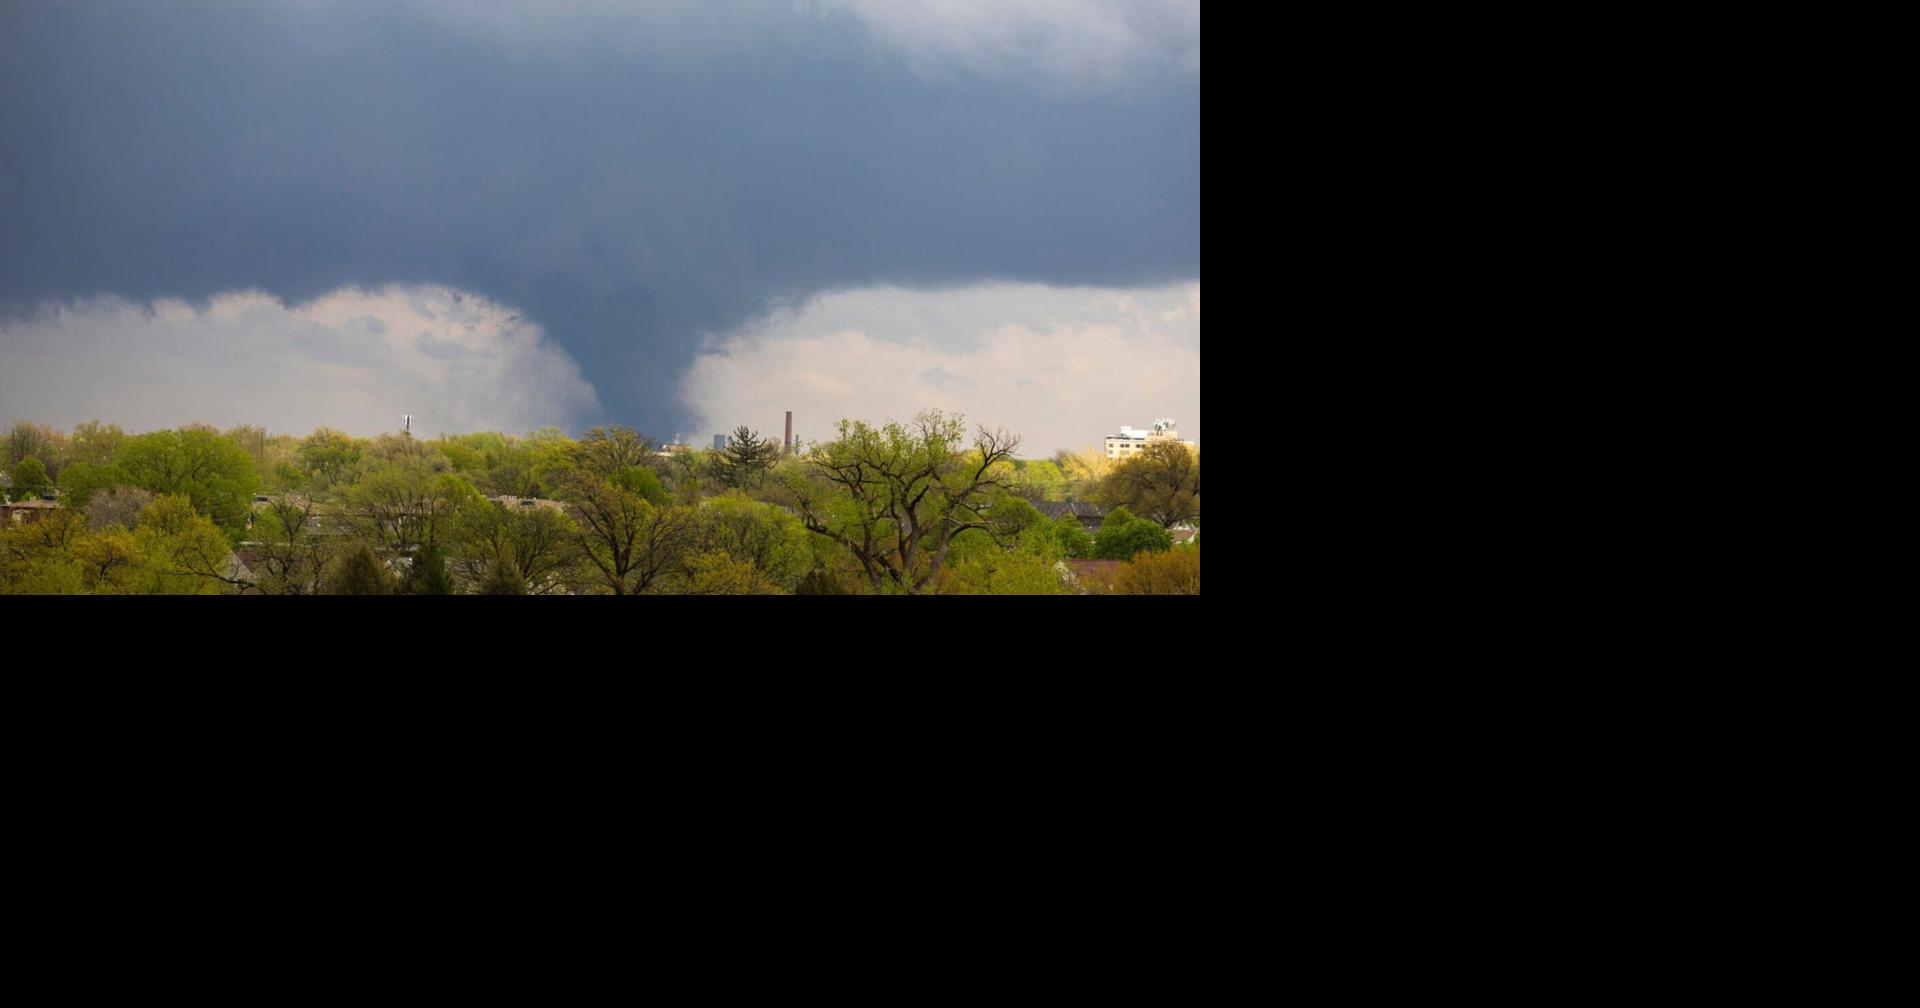 Nebraska sees one of most active tornado seasons on record